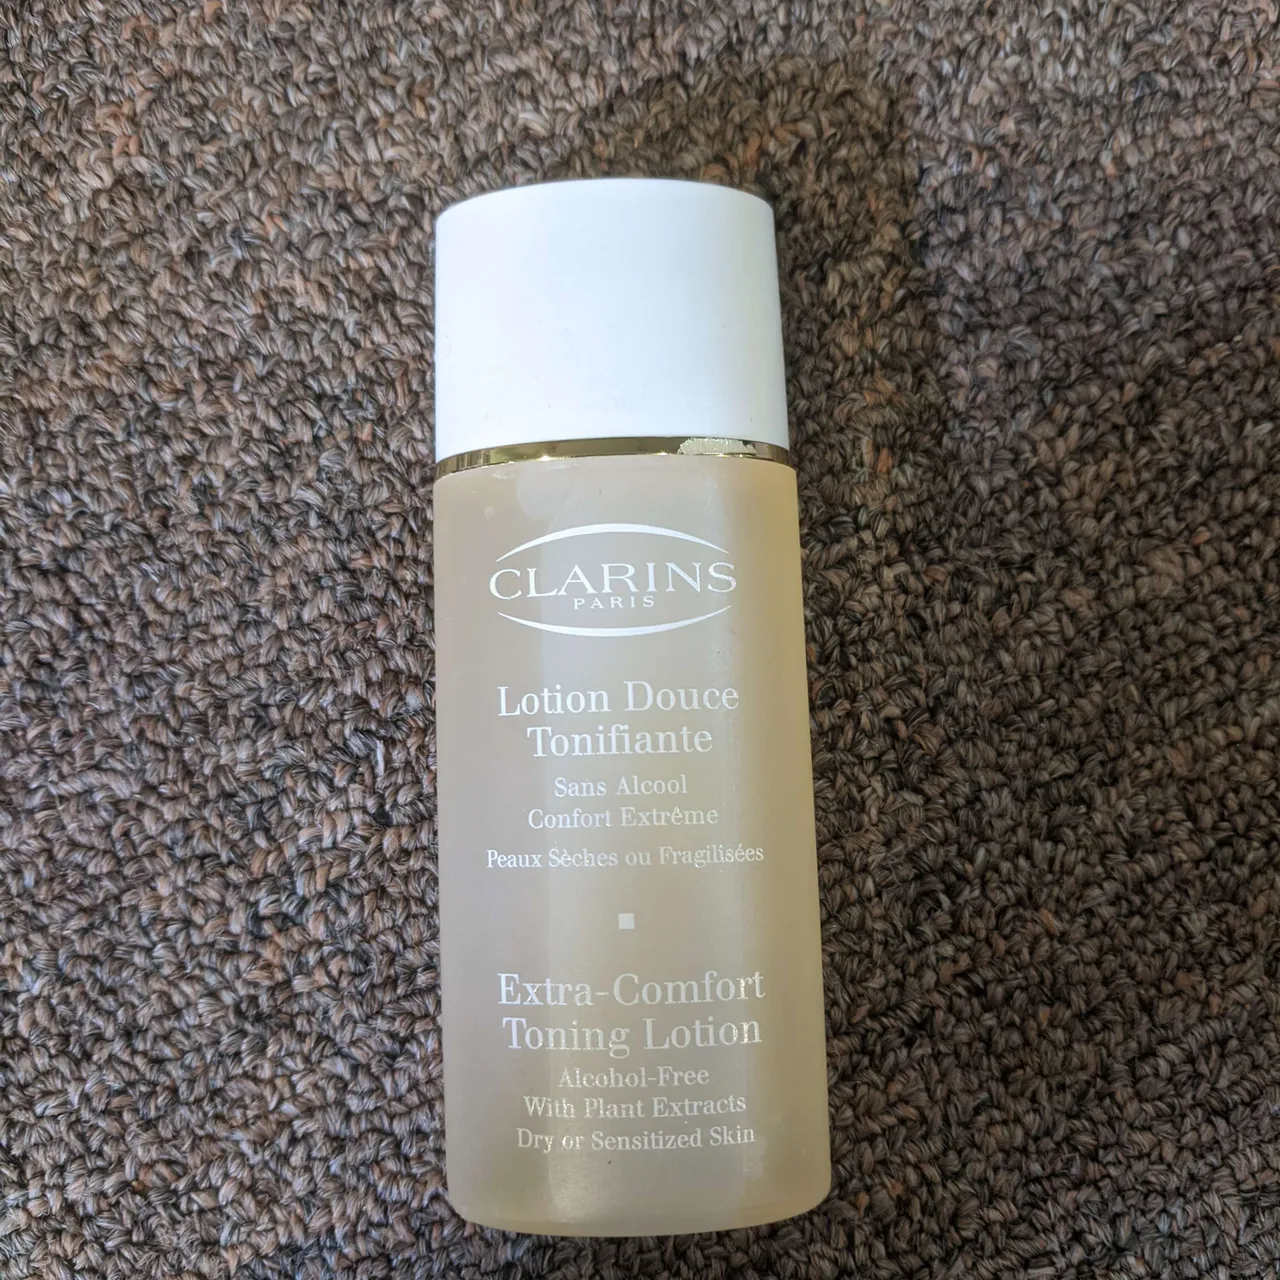 Clarins Extra-Comfort Toning lotion photo 1